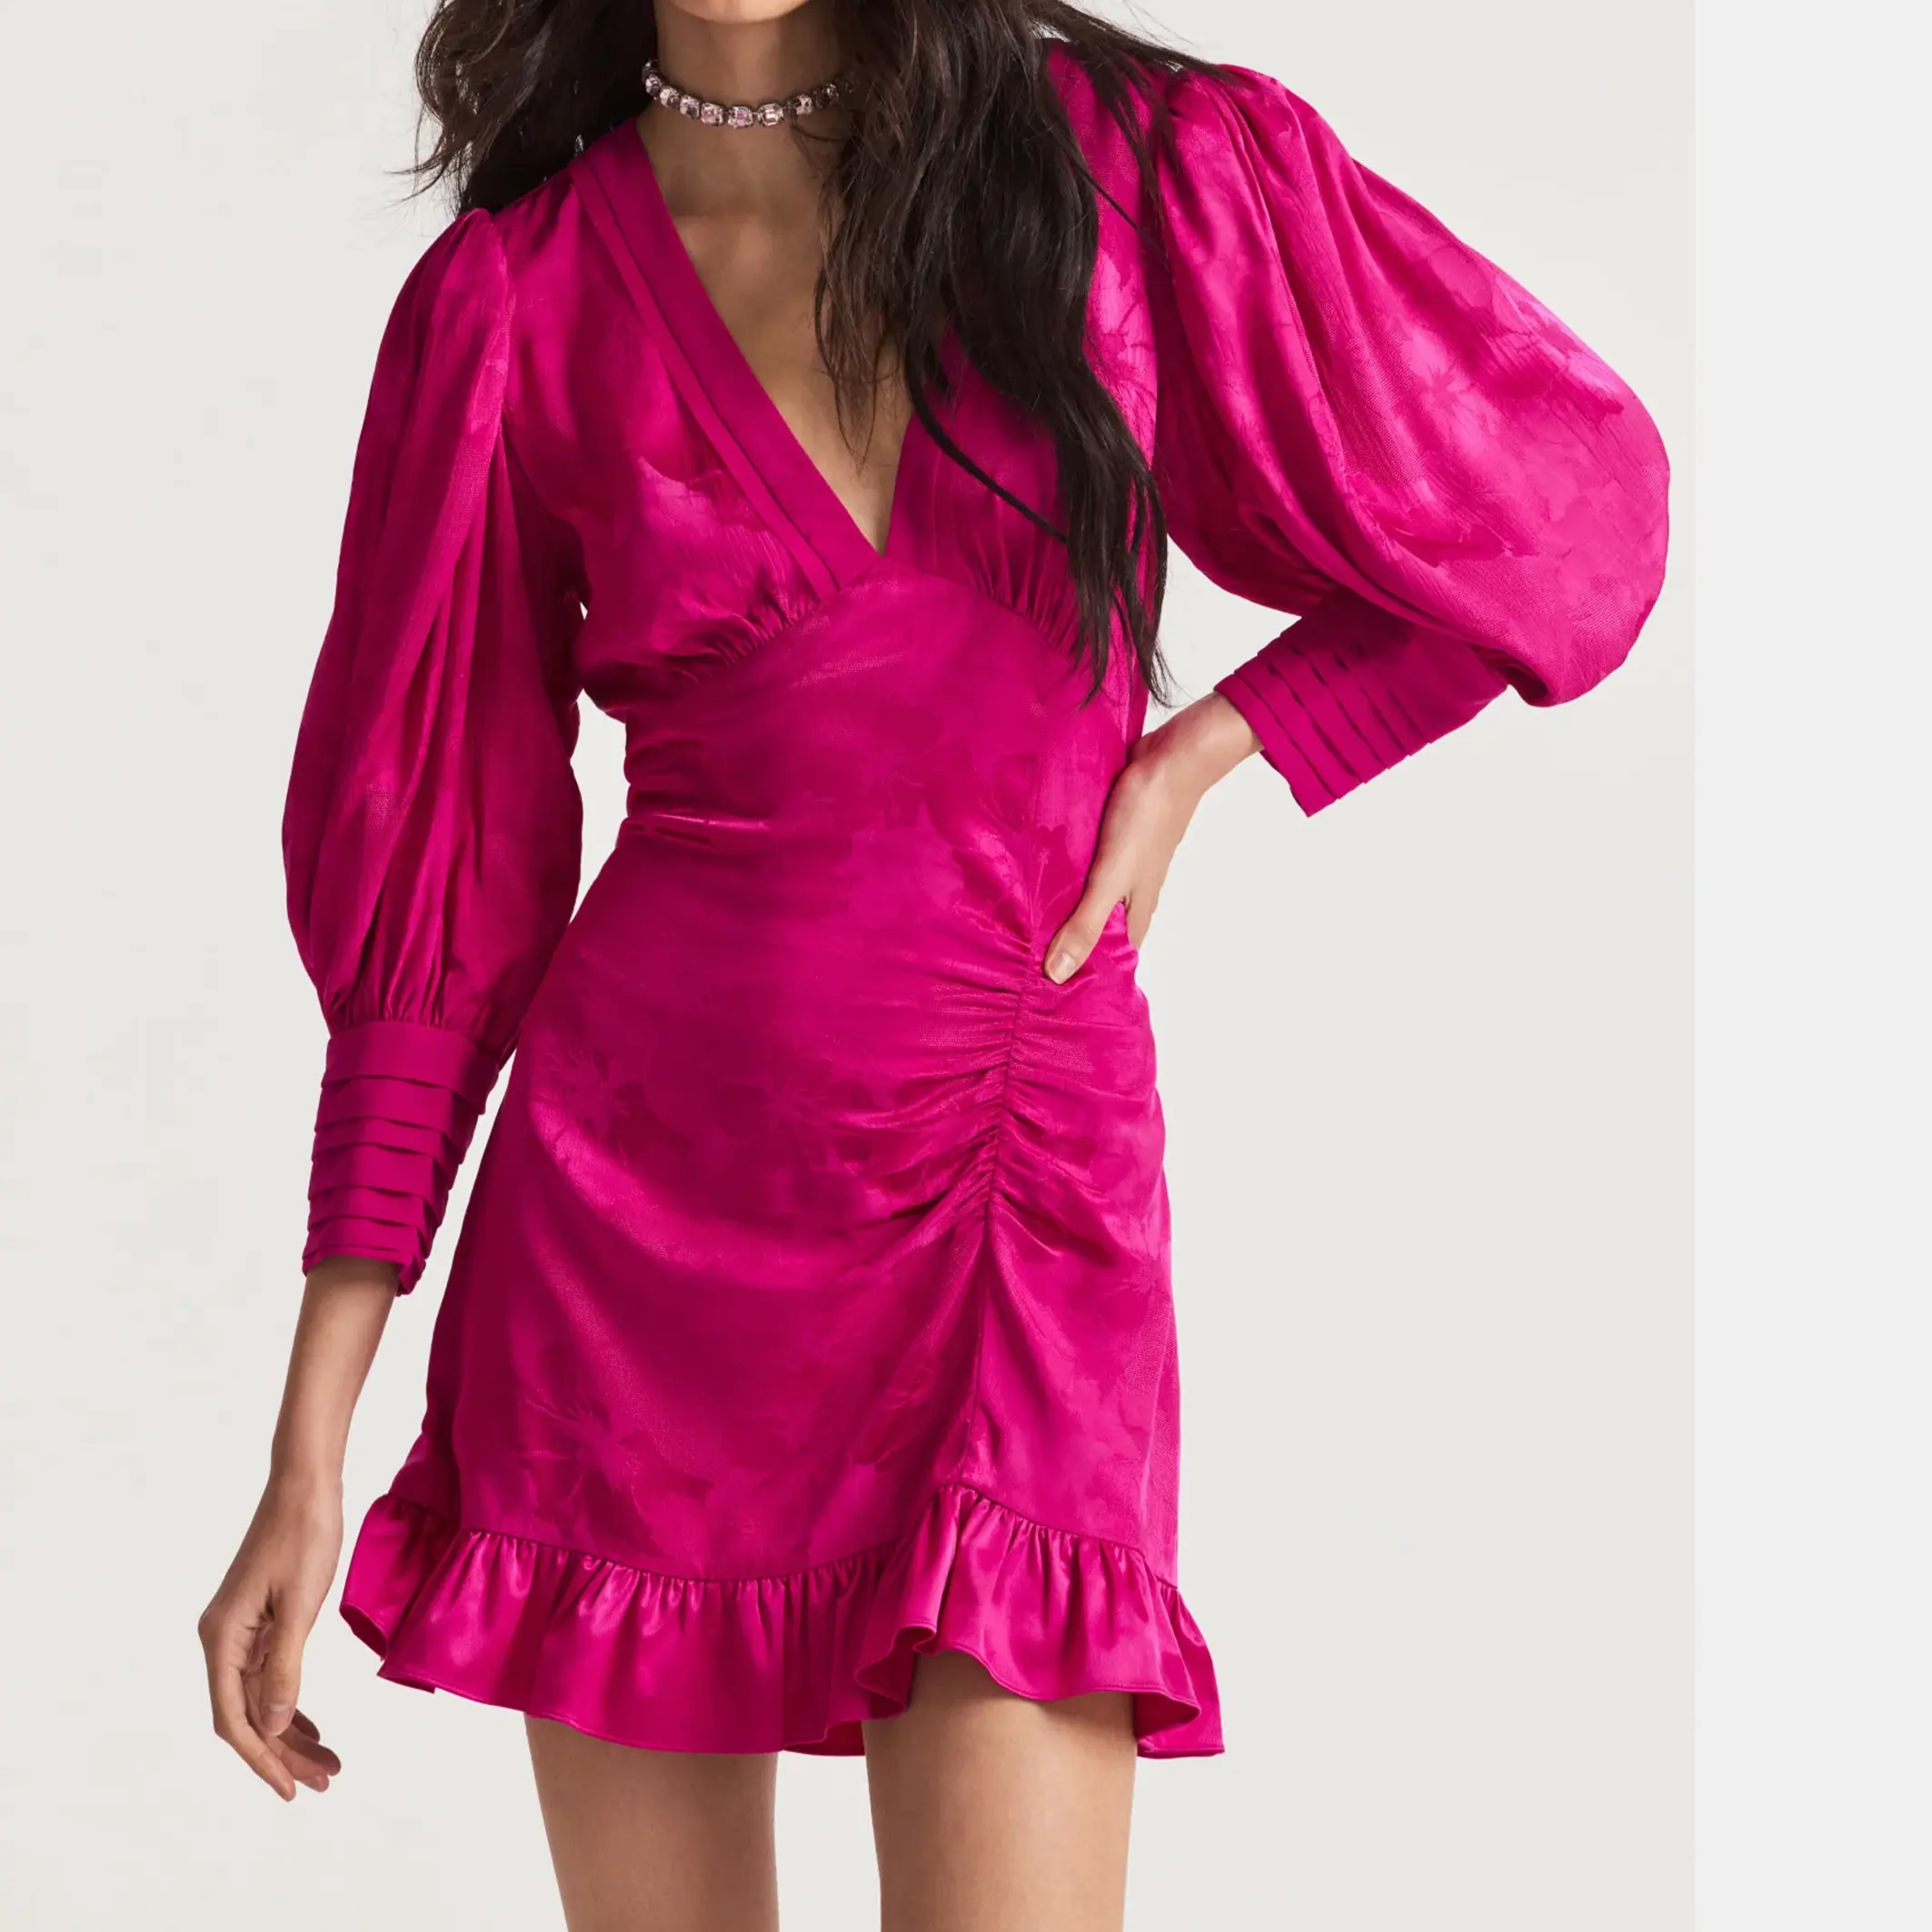 महिला लंबी आस्तीन सुरुचिपूर्ण Ruched आकस्मिक गहरी वी गर्दन सेक्सी पार्टी क्लब मखमल की पोशाक महिलाओं लक्जरी पोशाक